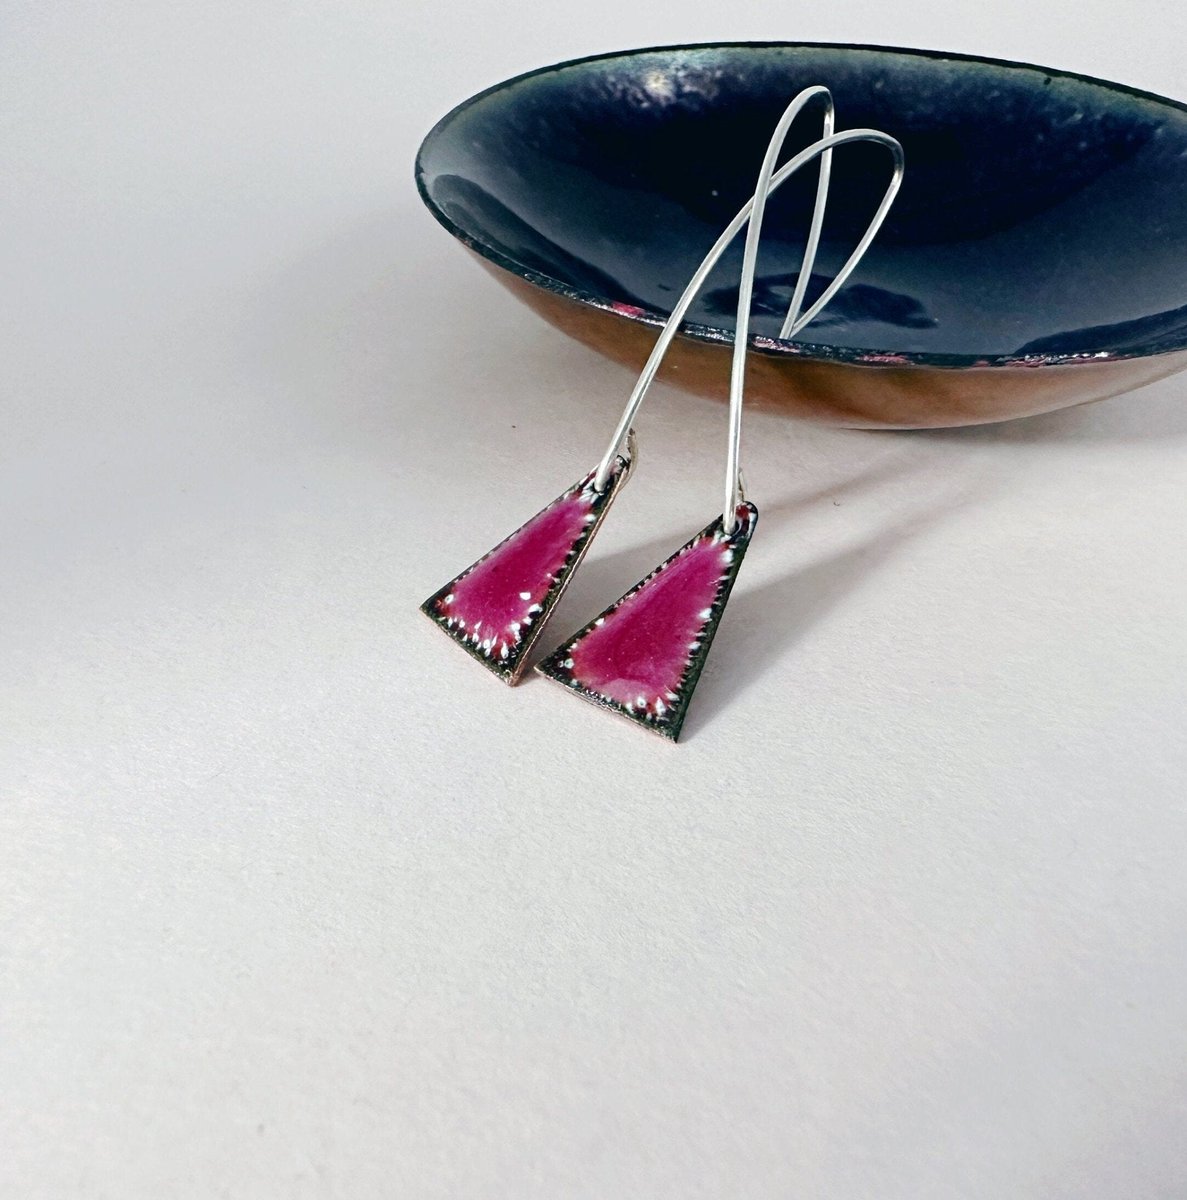 Raspberry Pink Enamel Triangle Shaped Earrings, Geometric Drop Earrings with Silver Ear Wires tuppu.net/1c45c70f #UKHashtags #bizbubble #MHHSBD #giftideas #HandmadeHour ##UKGiftHour #shopsmall #inbizhour #TriangleEarrings